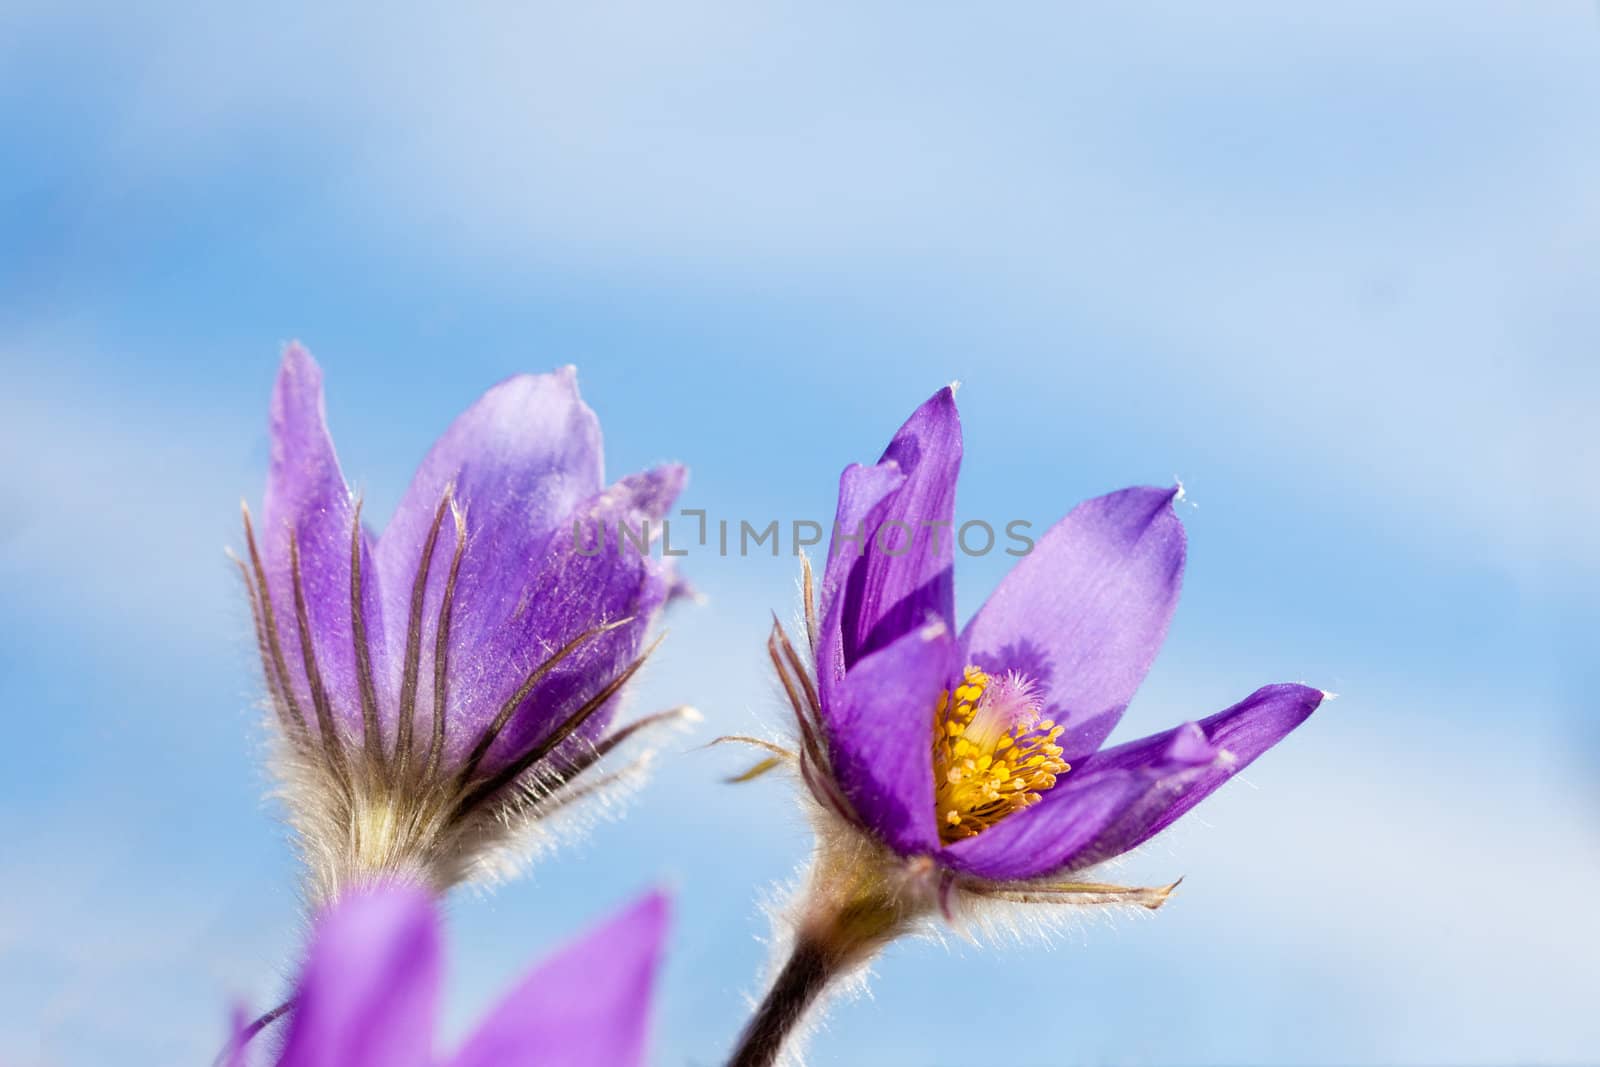 Pasque Flower close-up against blue sky by PiLens